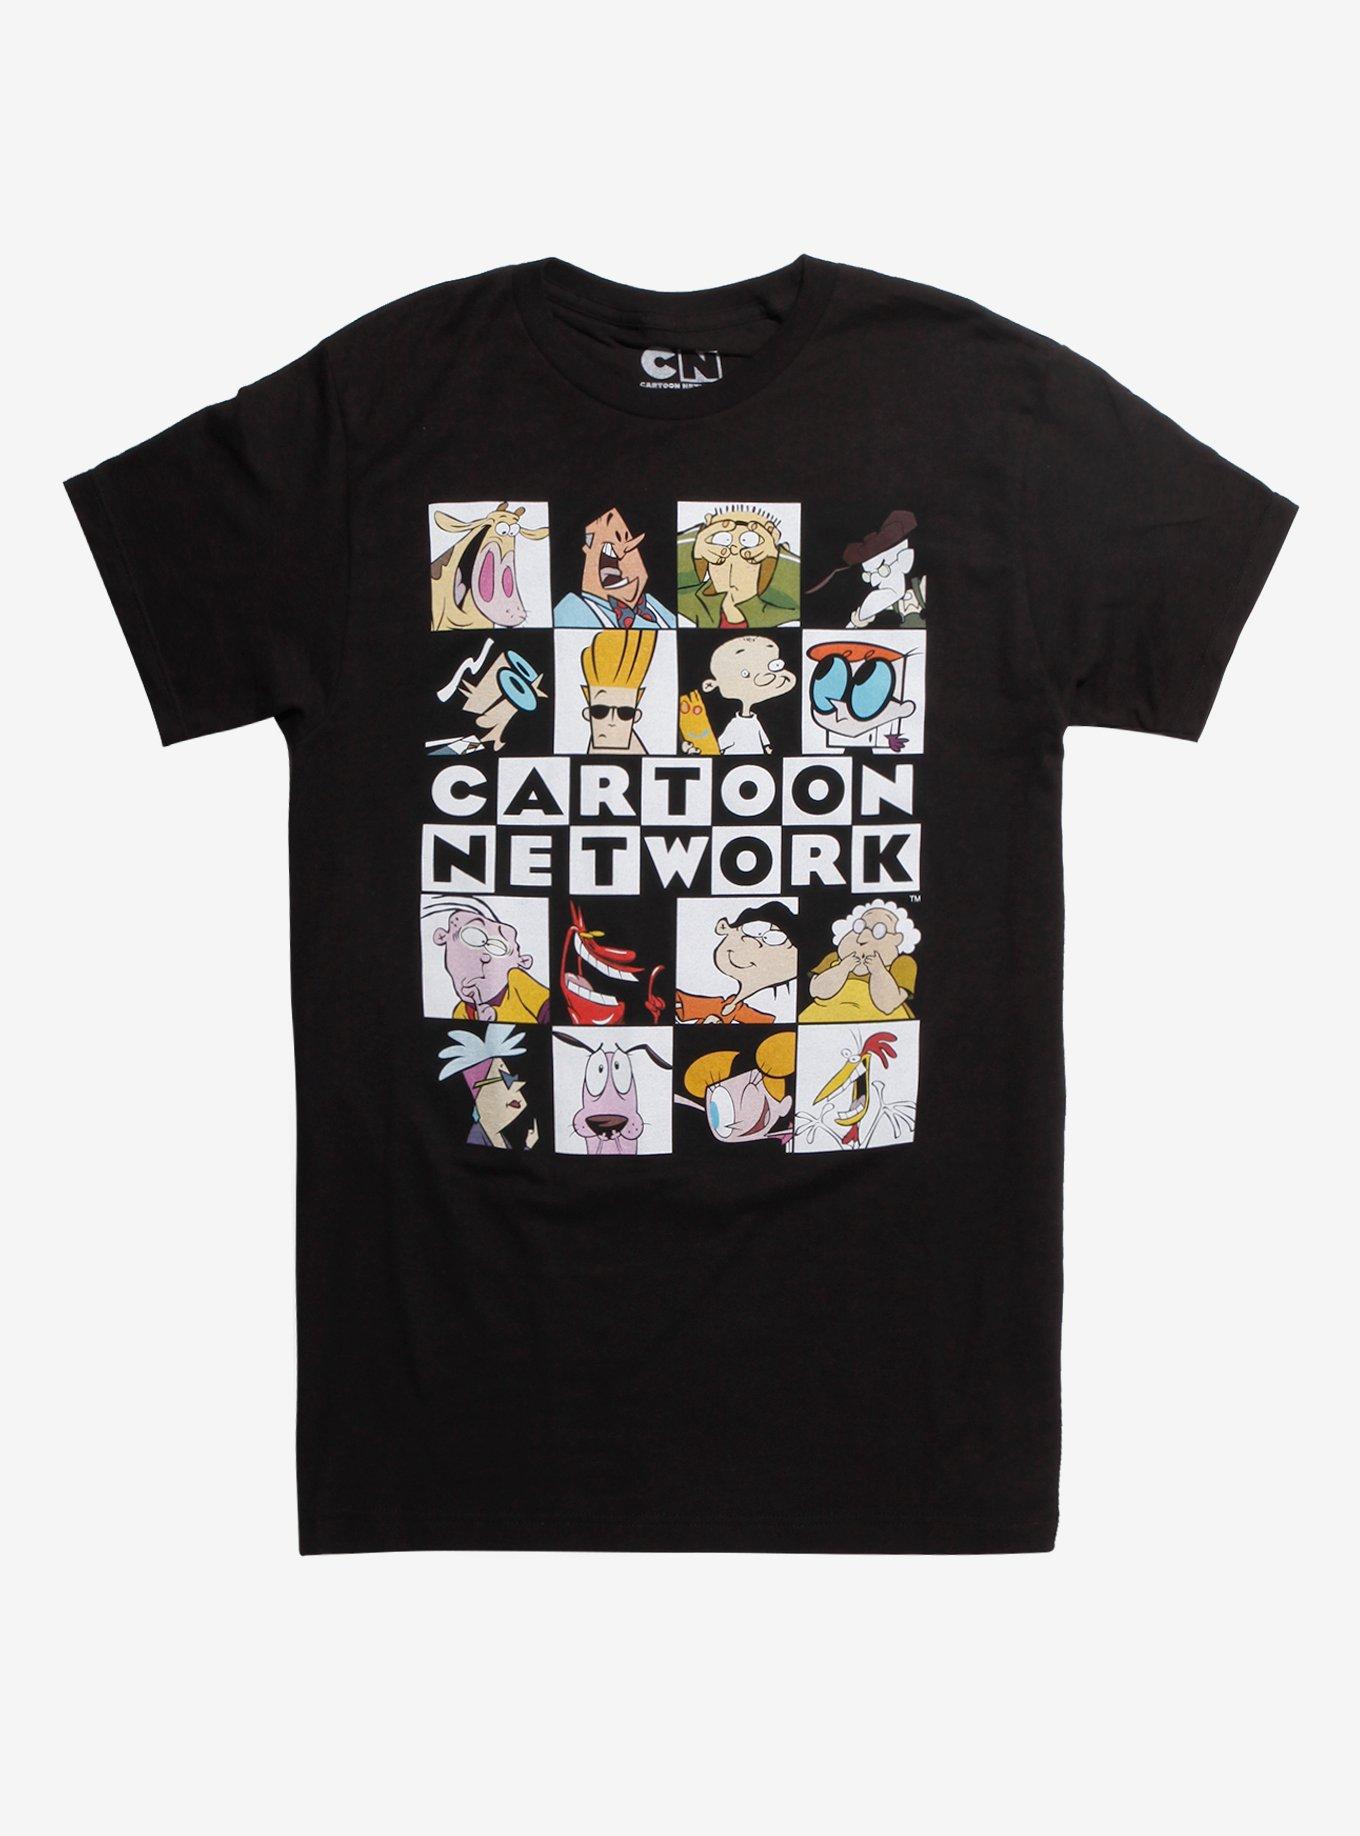 Cartoon Network Checkered Box Characters T-Shirt Hot Topic Exclusive, BLACK, hi-res